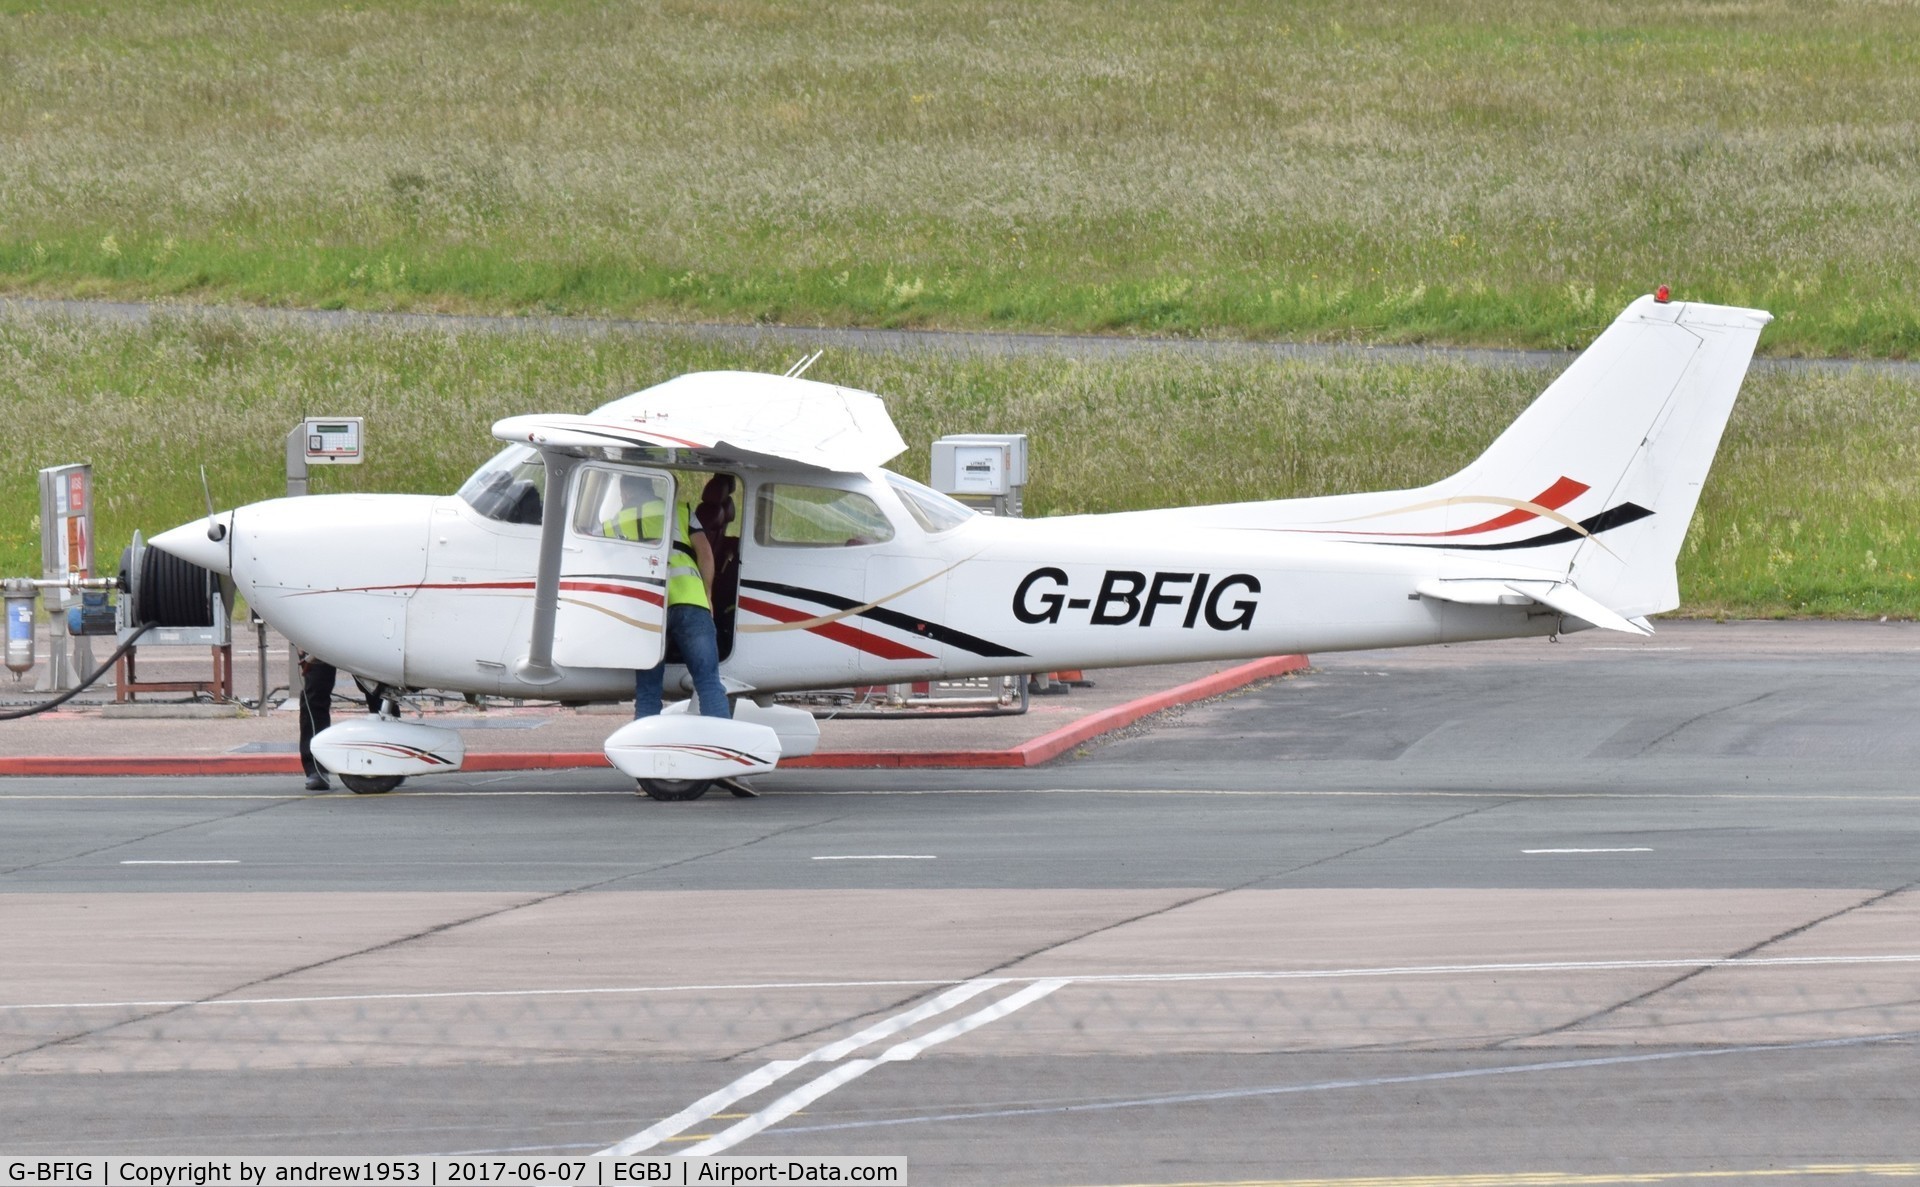 G-BFIG, 1977 Reims FR172K Hawk XP C/N 0615, G-BFIG at Gloucestershire Airport.